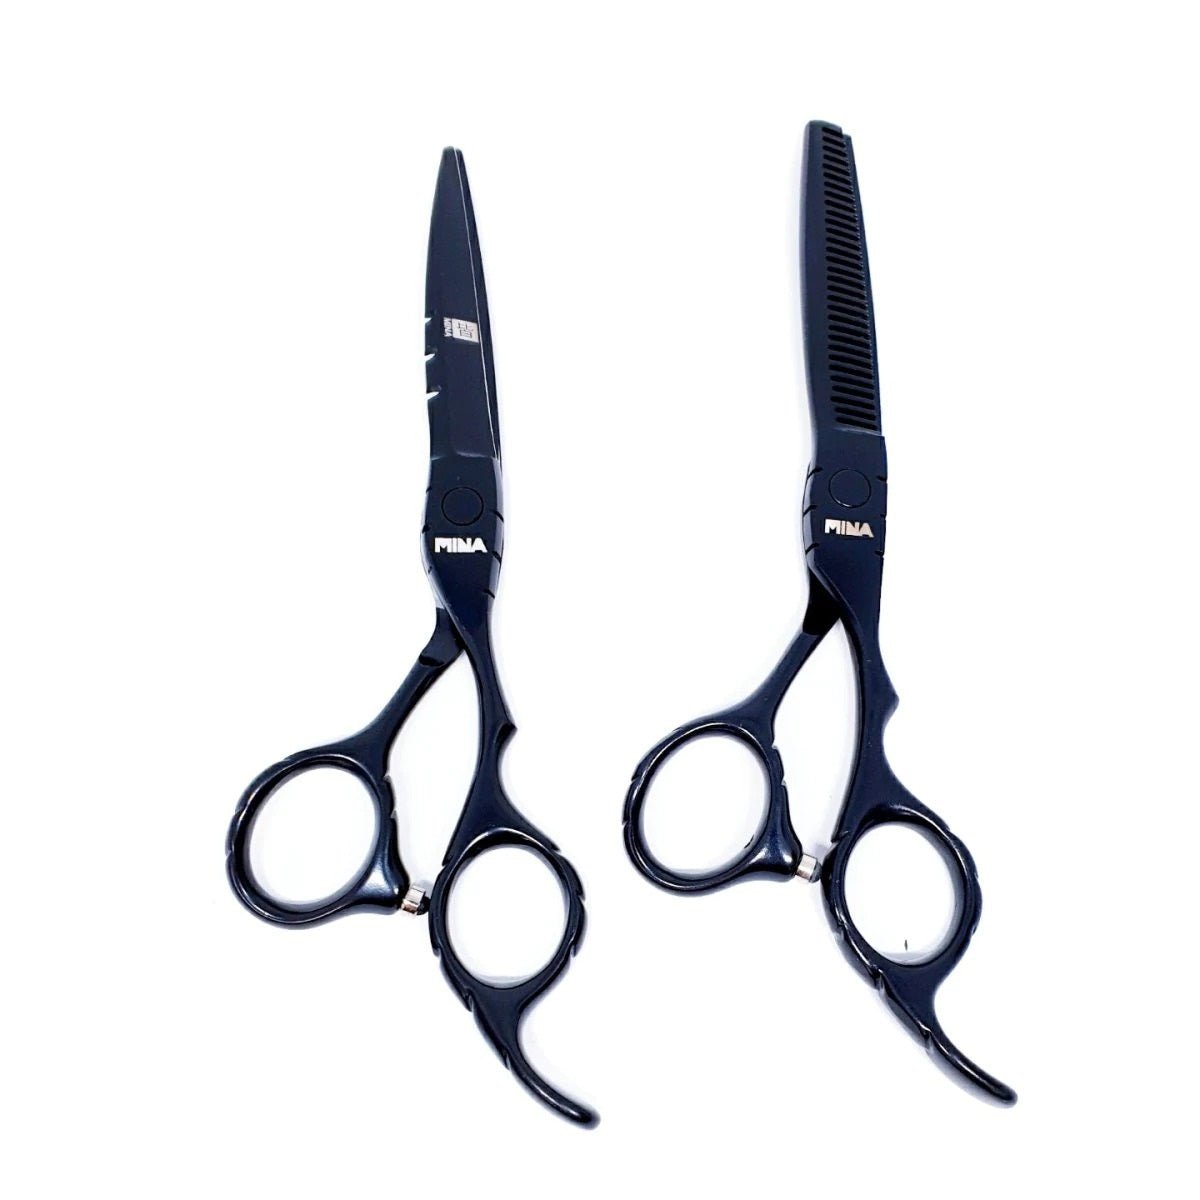 MAHSON 65 Inches Resharpening Professional Salon Barber Hair Cutting  Scissors for Hair cutting Men Women Scissors